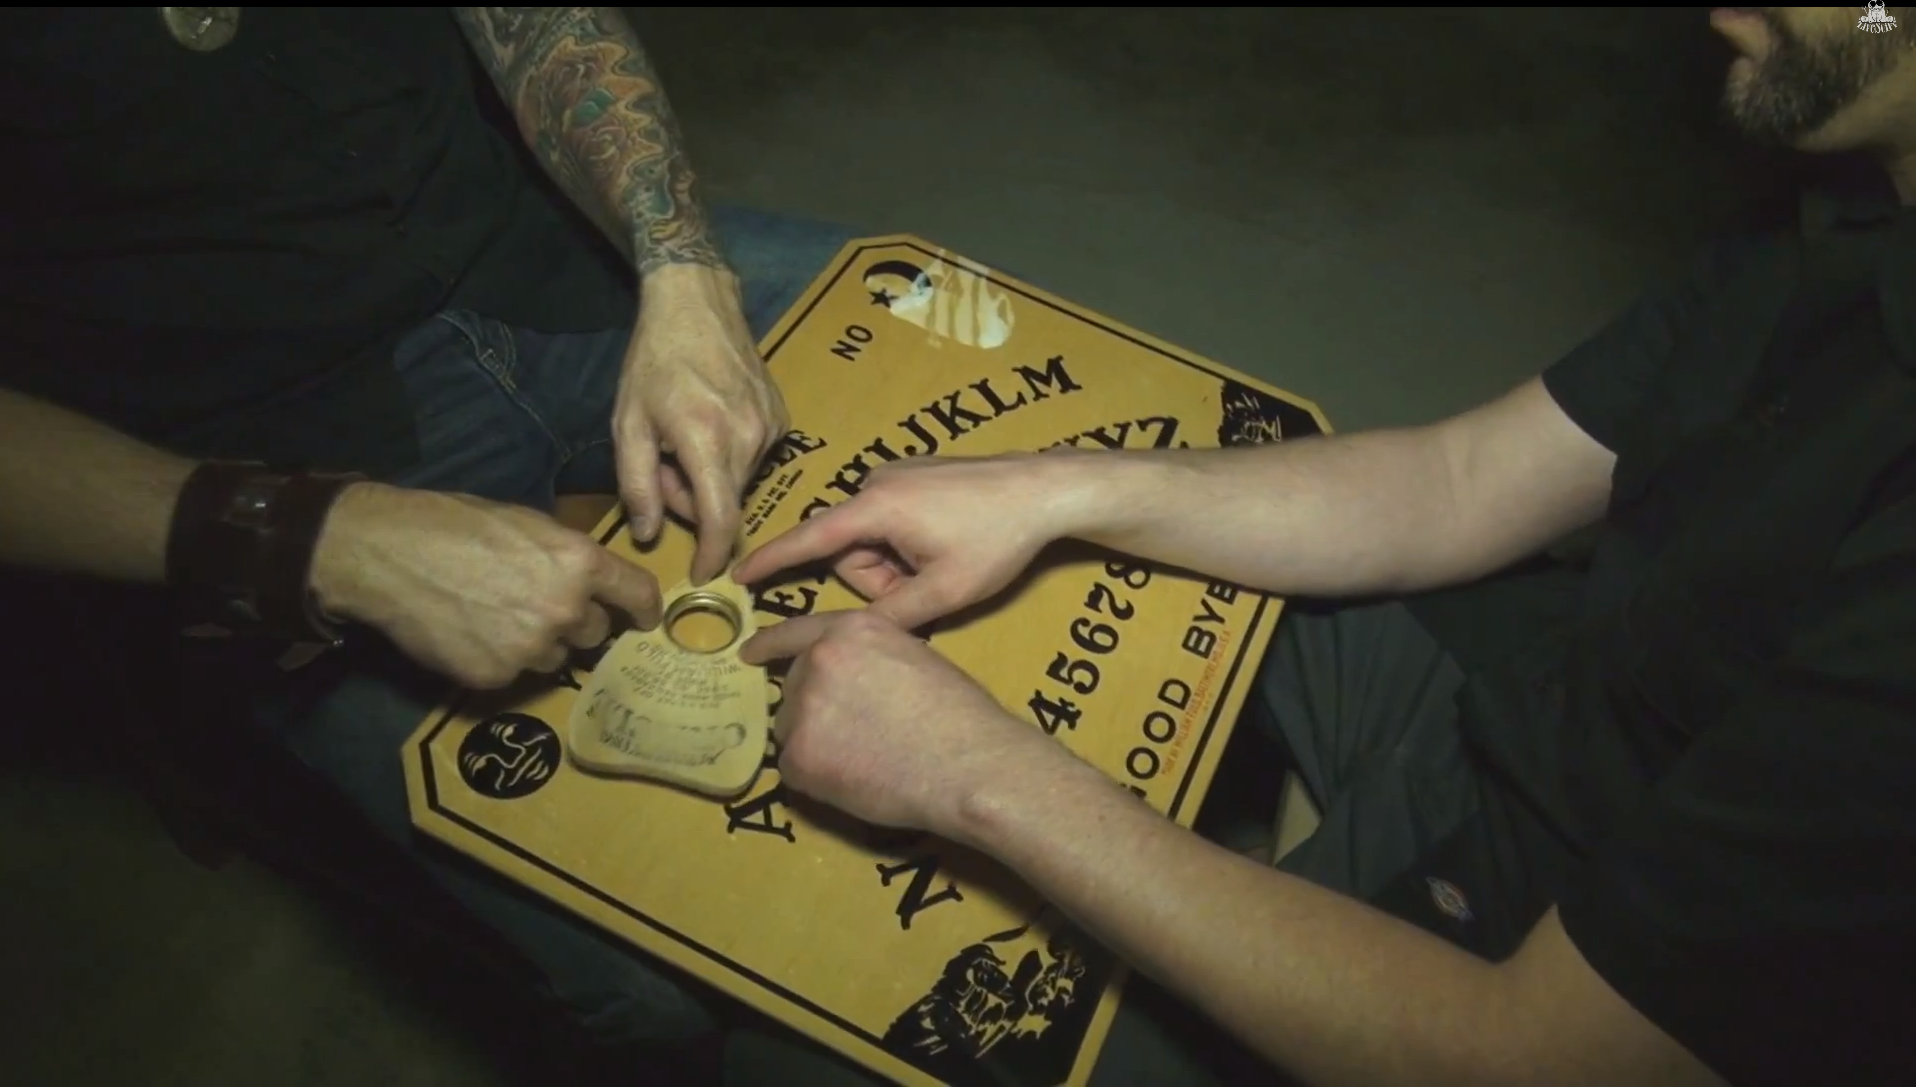 LiveSciFi team uses Ouija Board to contact paranormal spirits